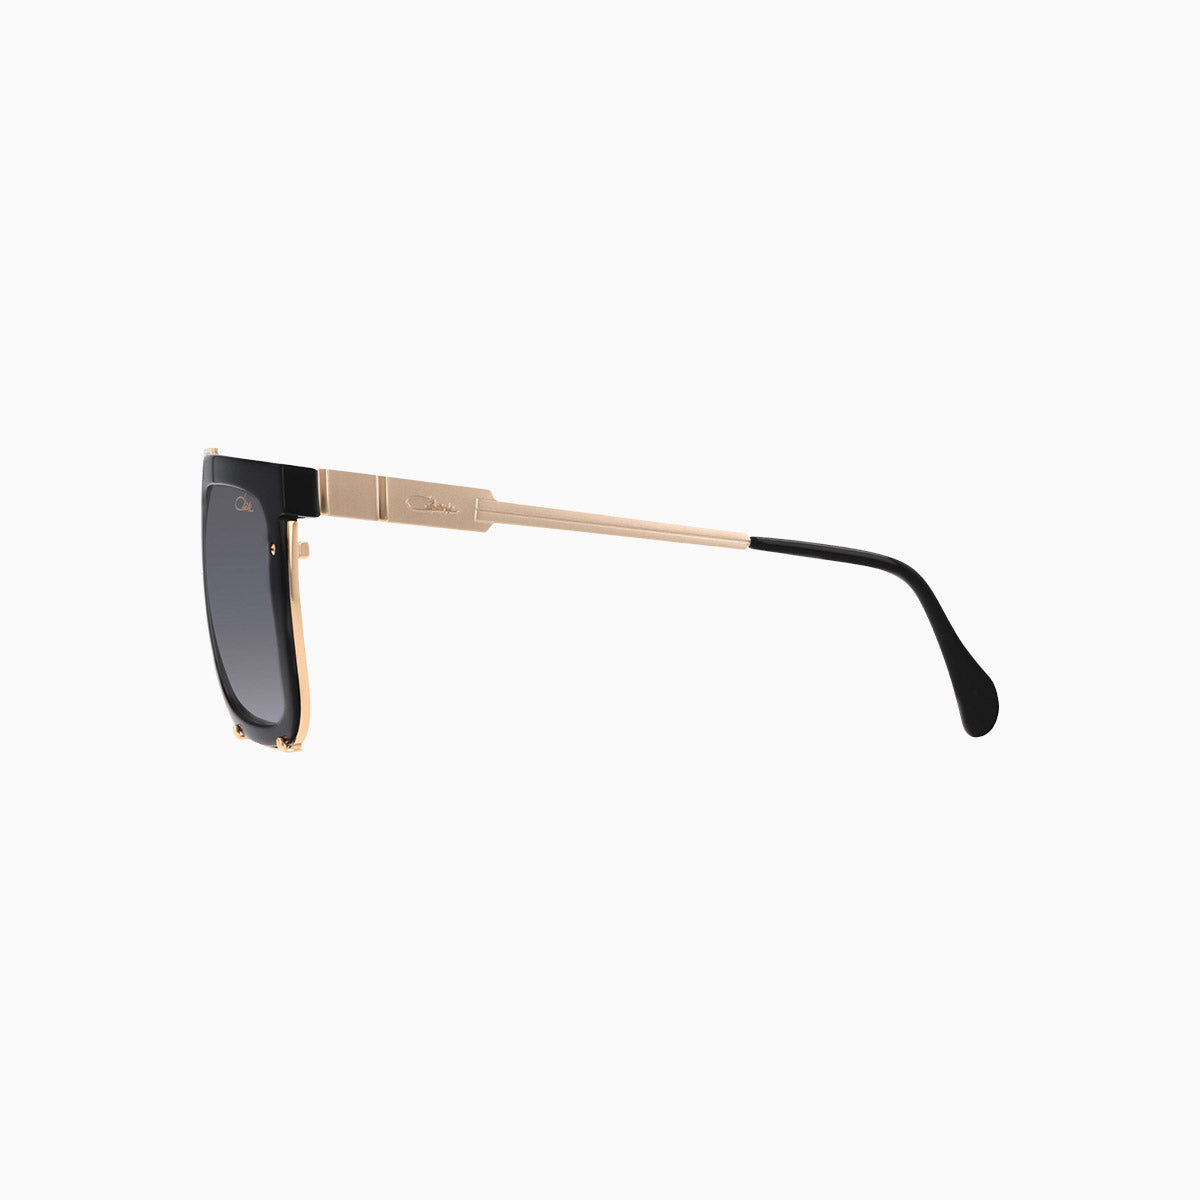 cazal-eyewear-mens-cazal-648-001-black-gold-sunglasses-cazal648-001